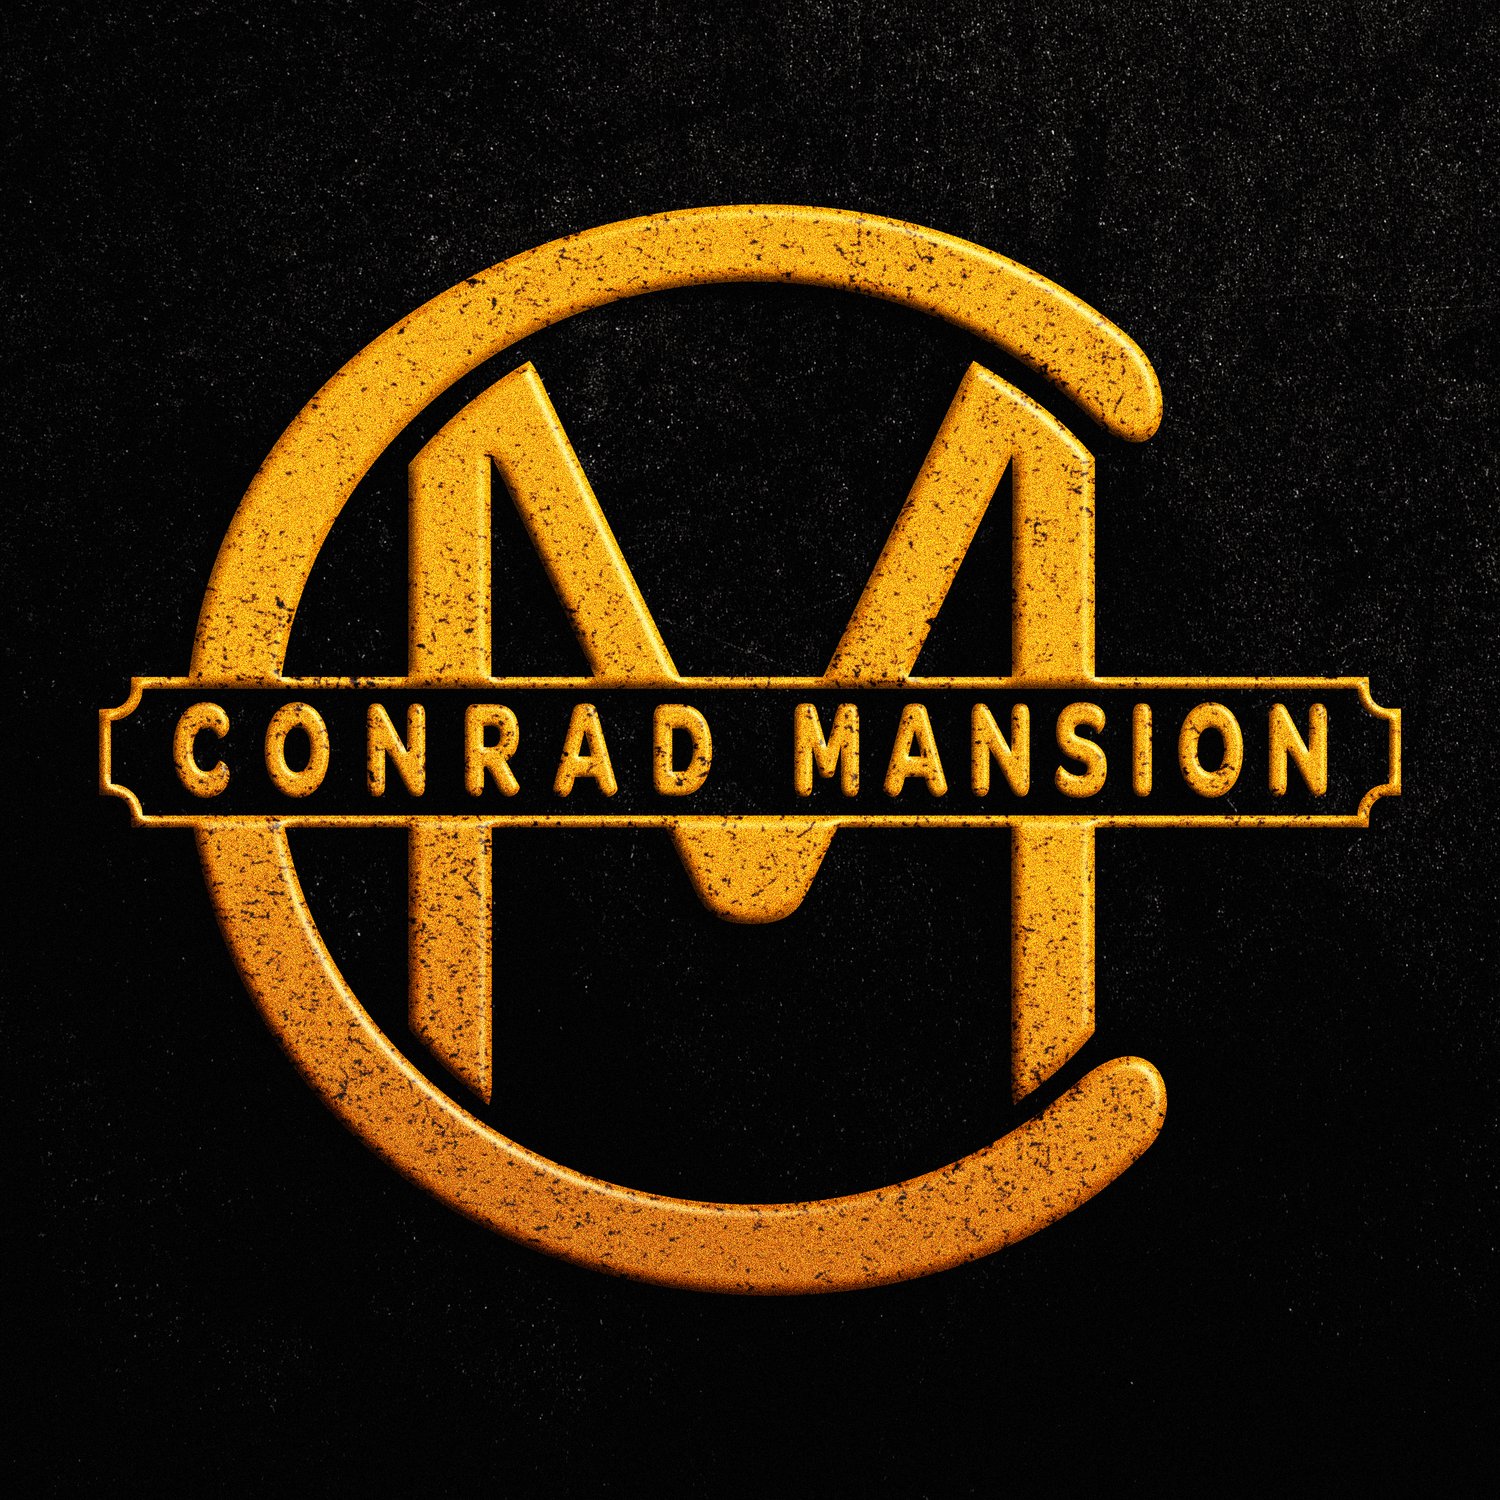 The Conrad Mansion